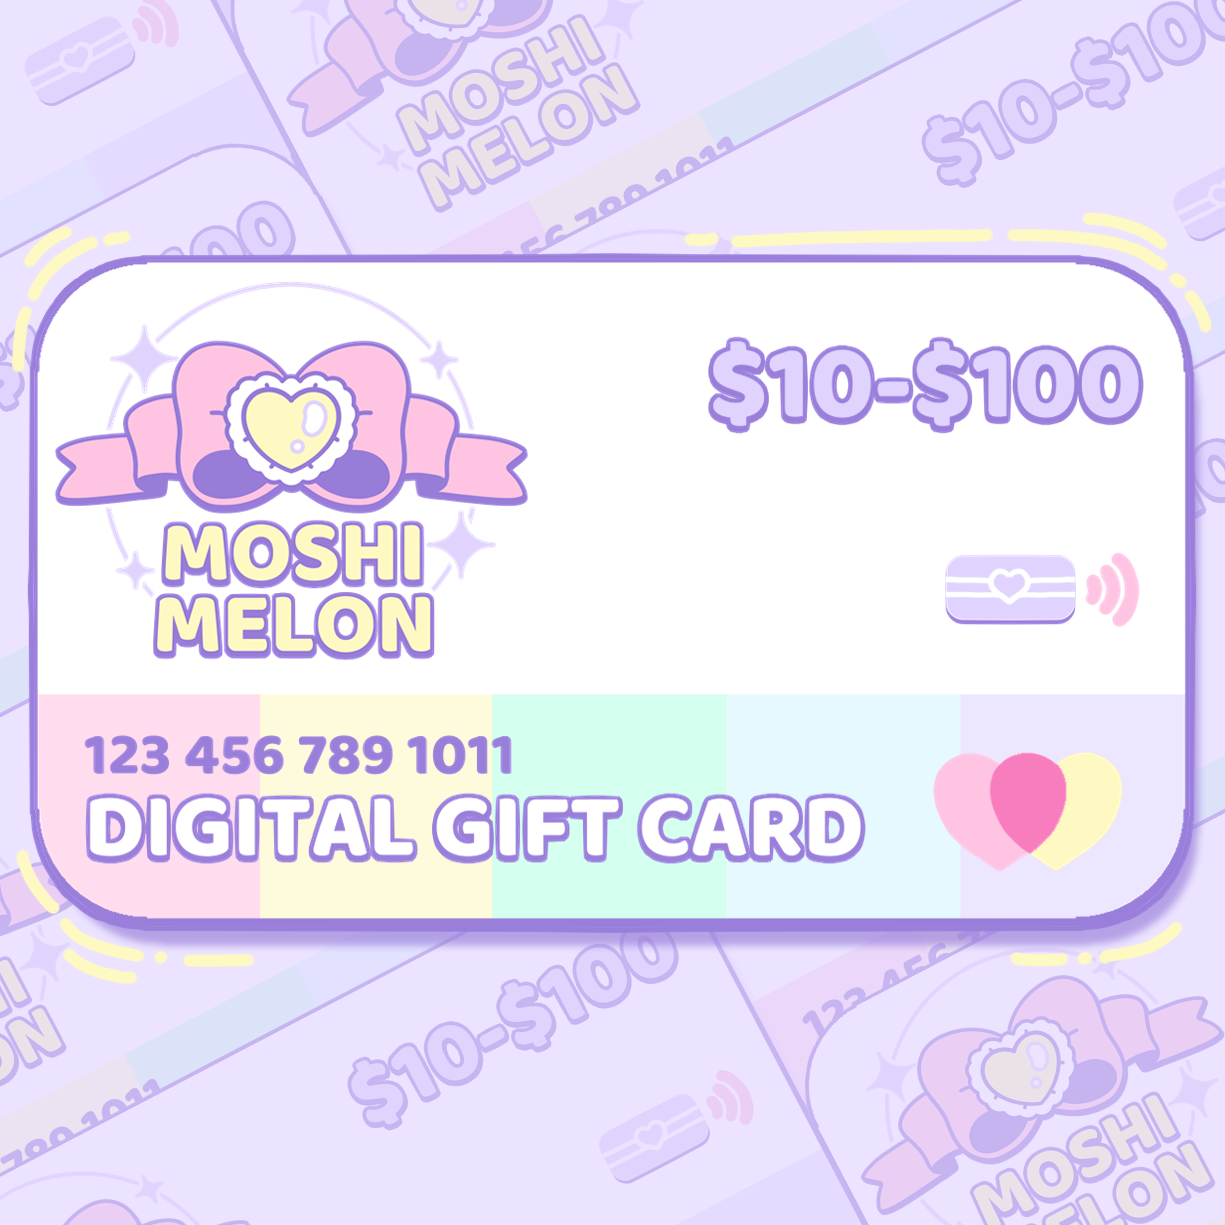 Moshi Melon Gift Card